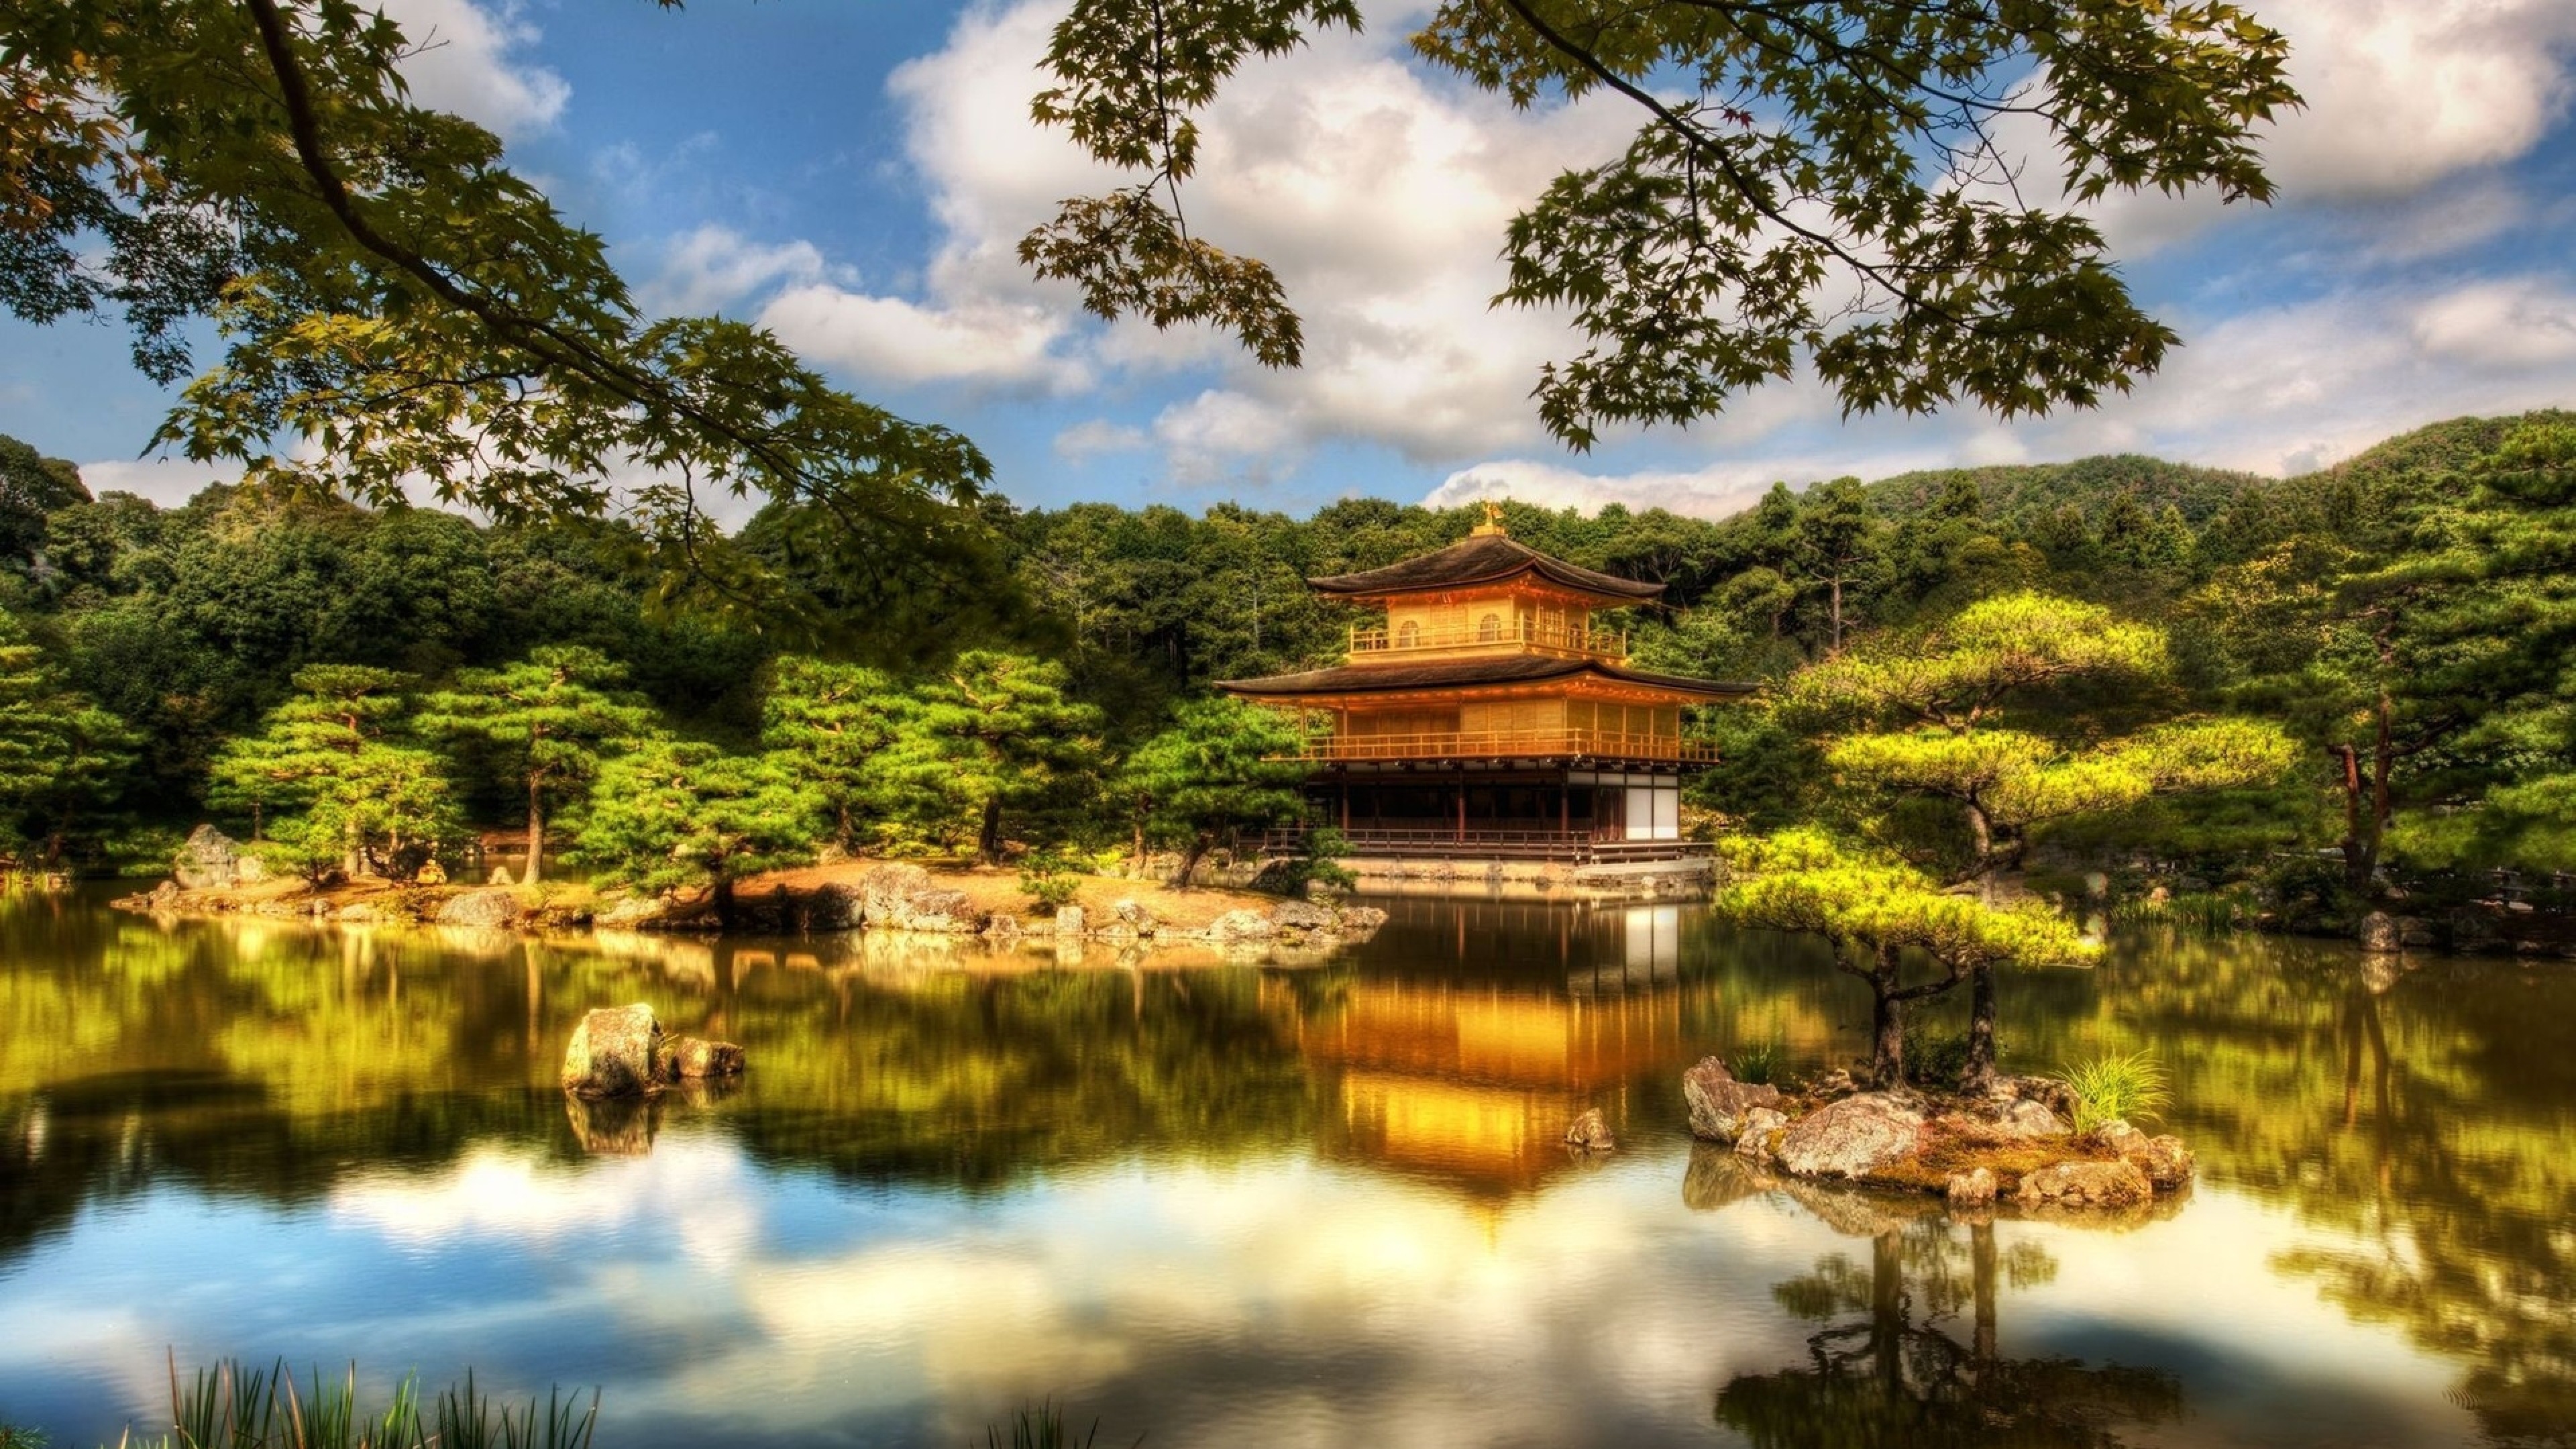 3840x2160 Wallpaper ryoanji zen garden japan mirabell gardens 3840x2160